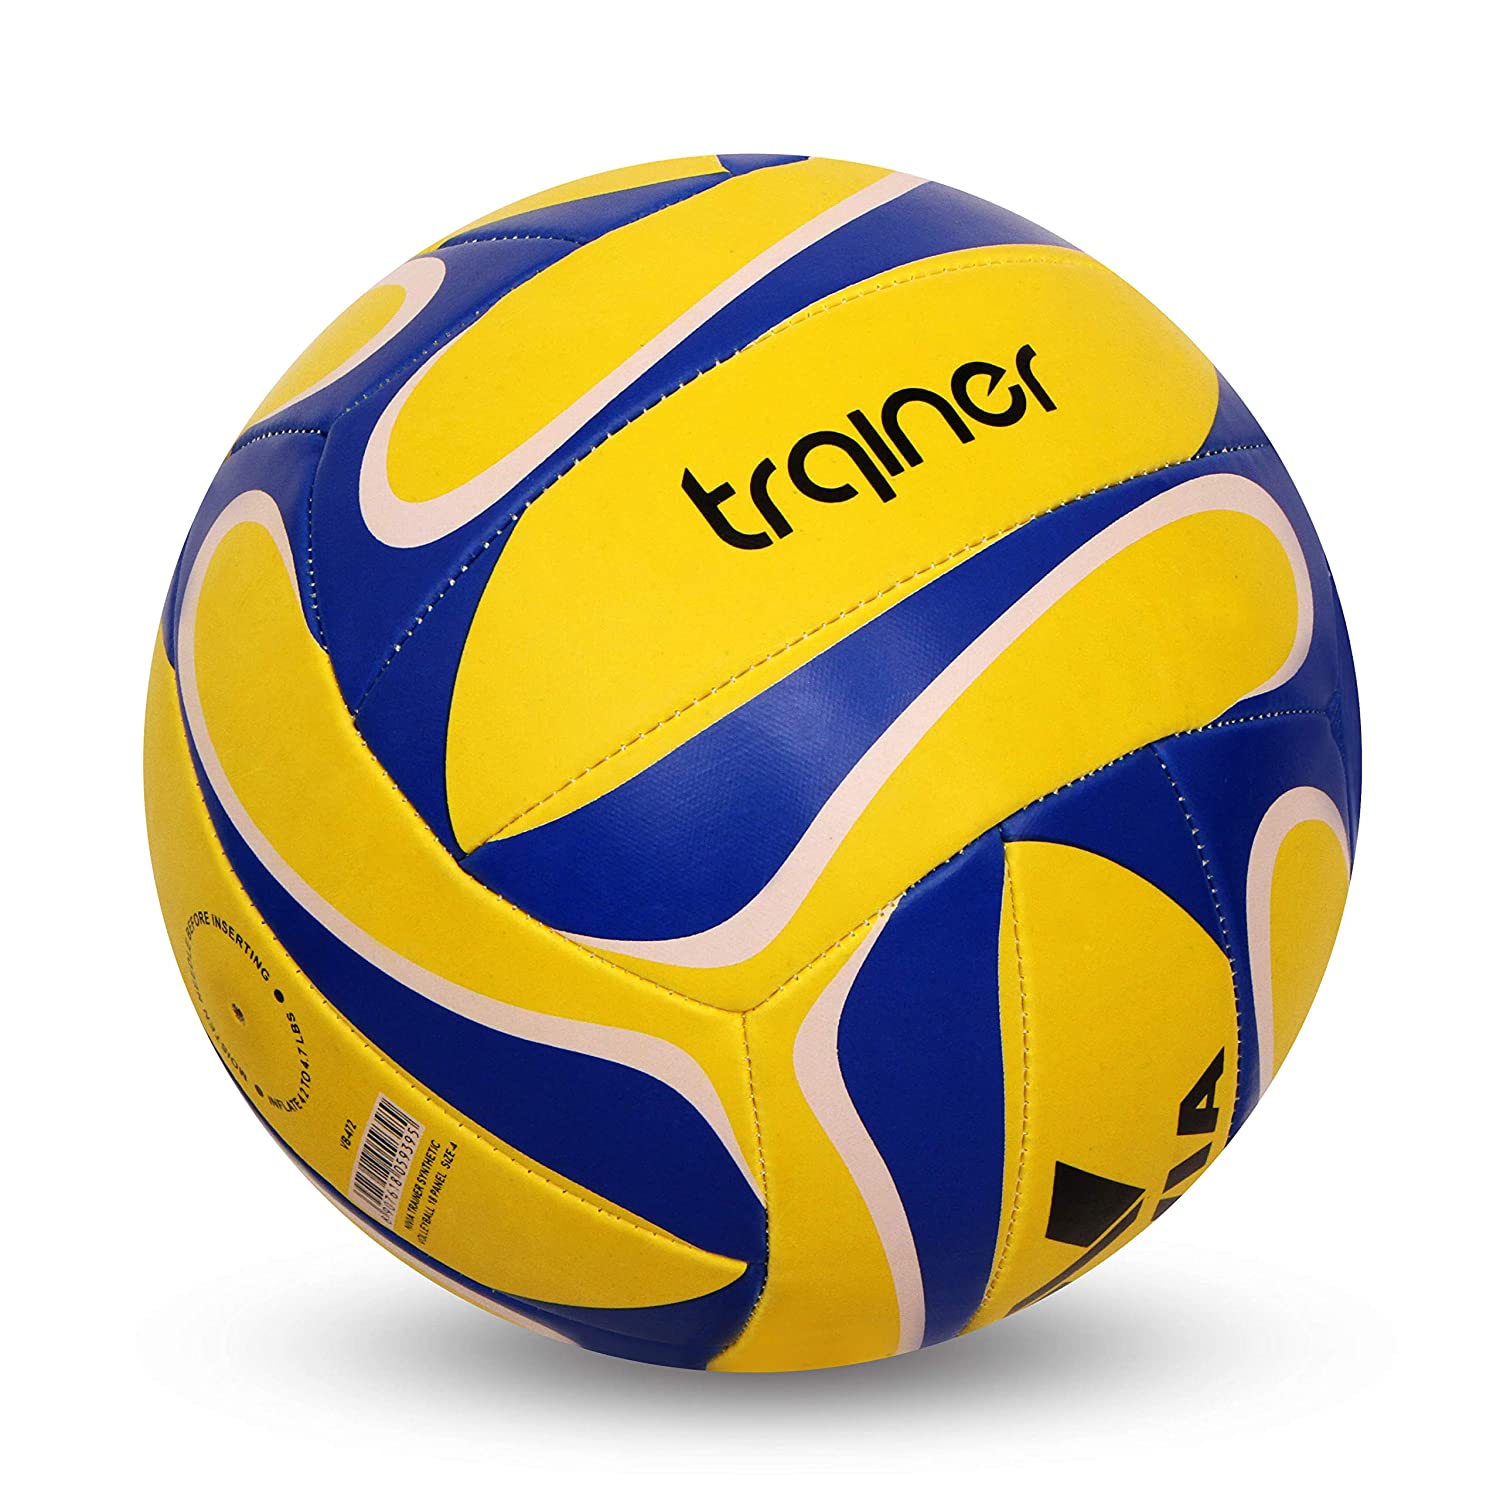 Nivia Trainer Volleyball, Size 4 - Best Price online Prokicksports.com